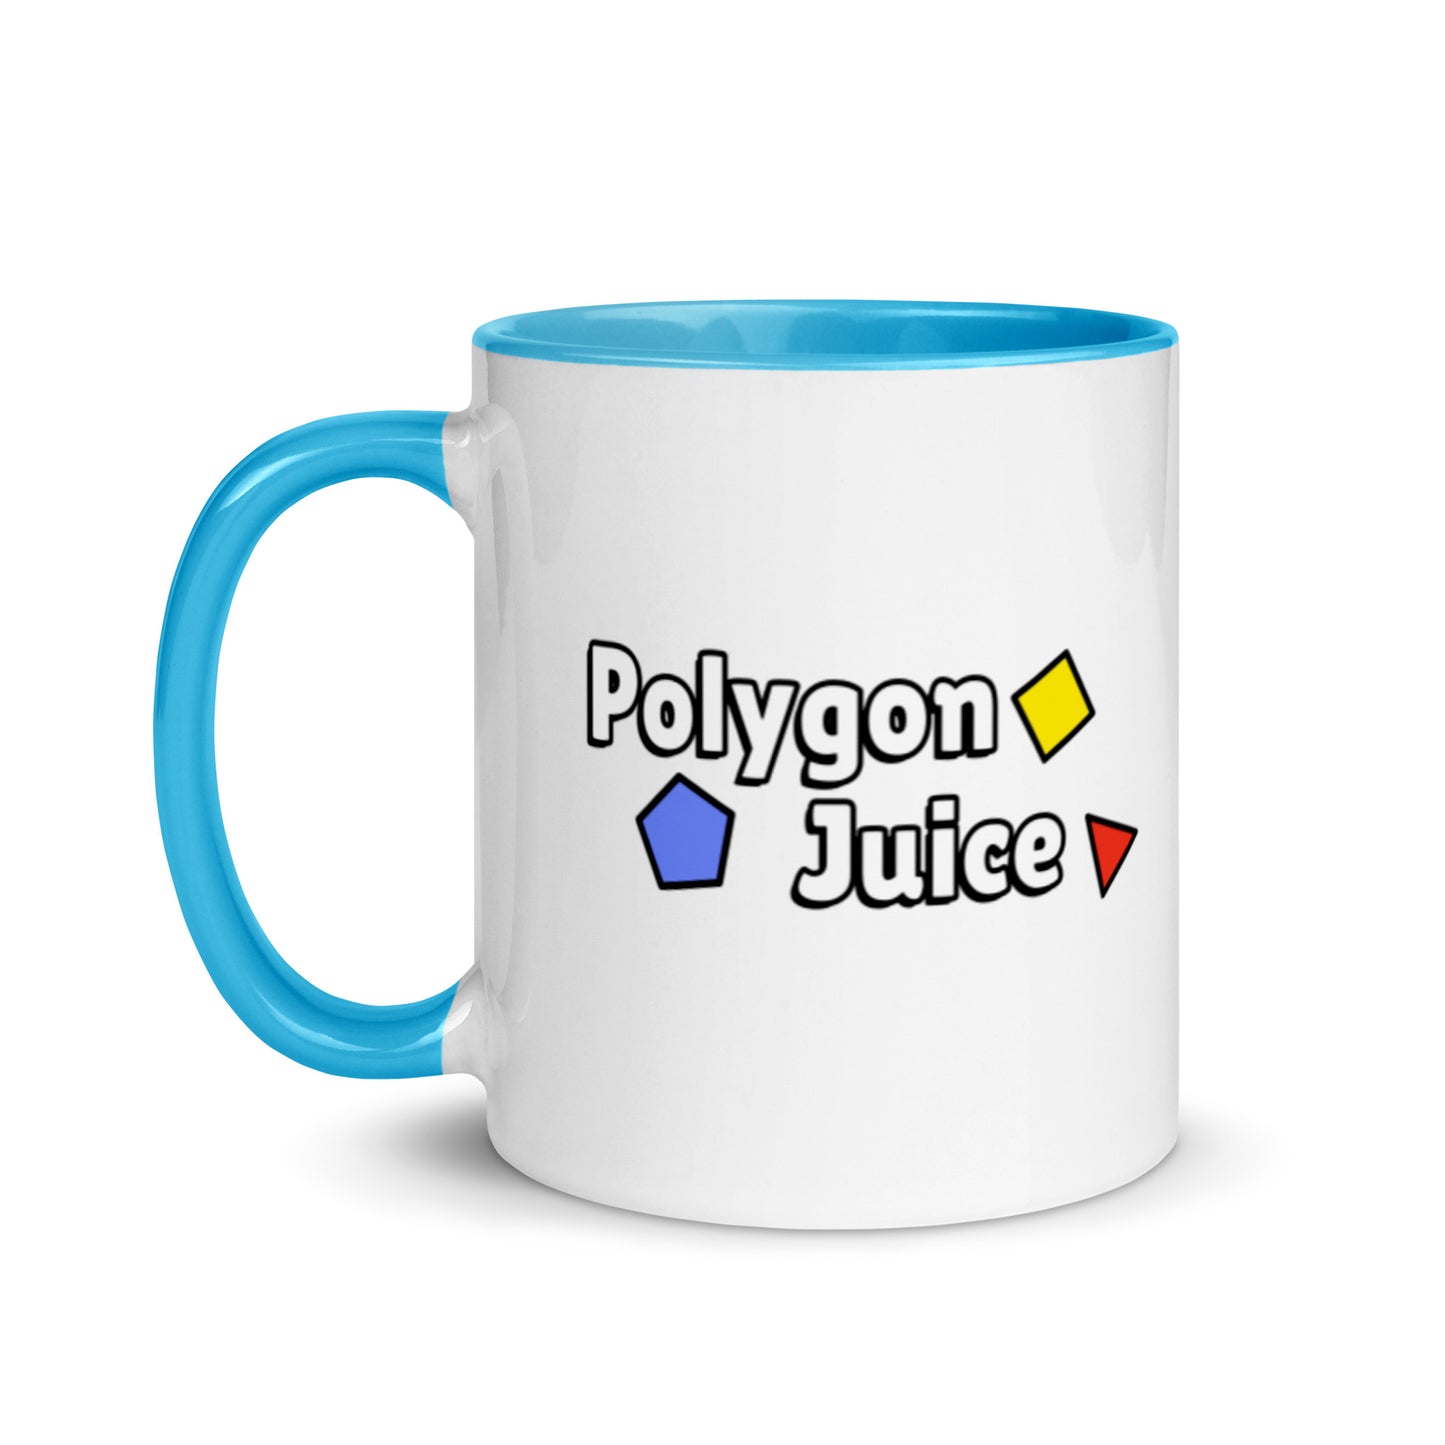 Polygon Juice Mug